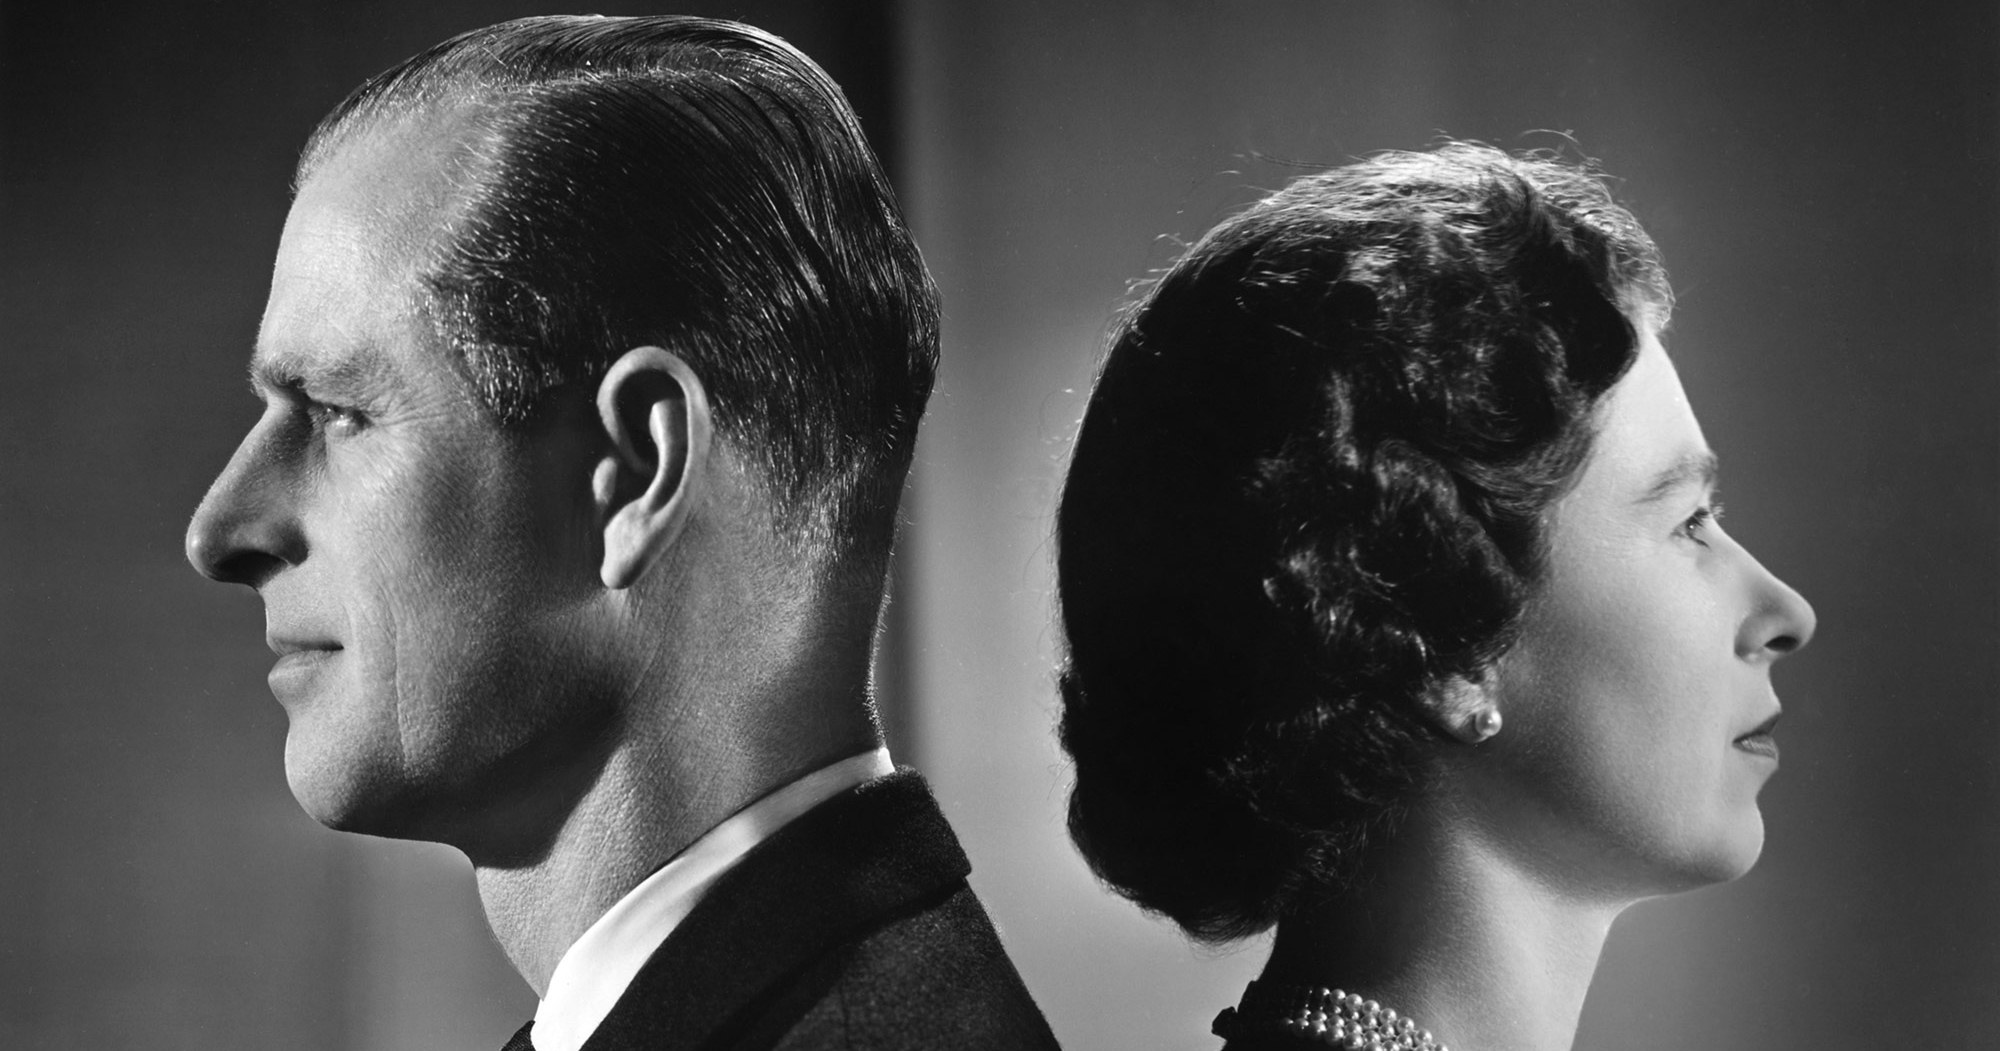 Queen Elizabeth and Prince Philip’s Seven-Decade Love Story